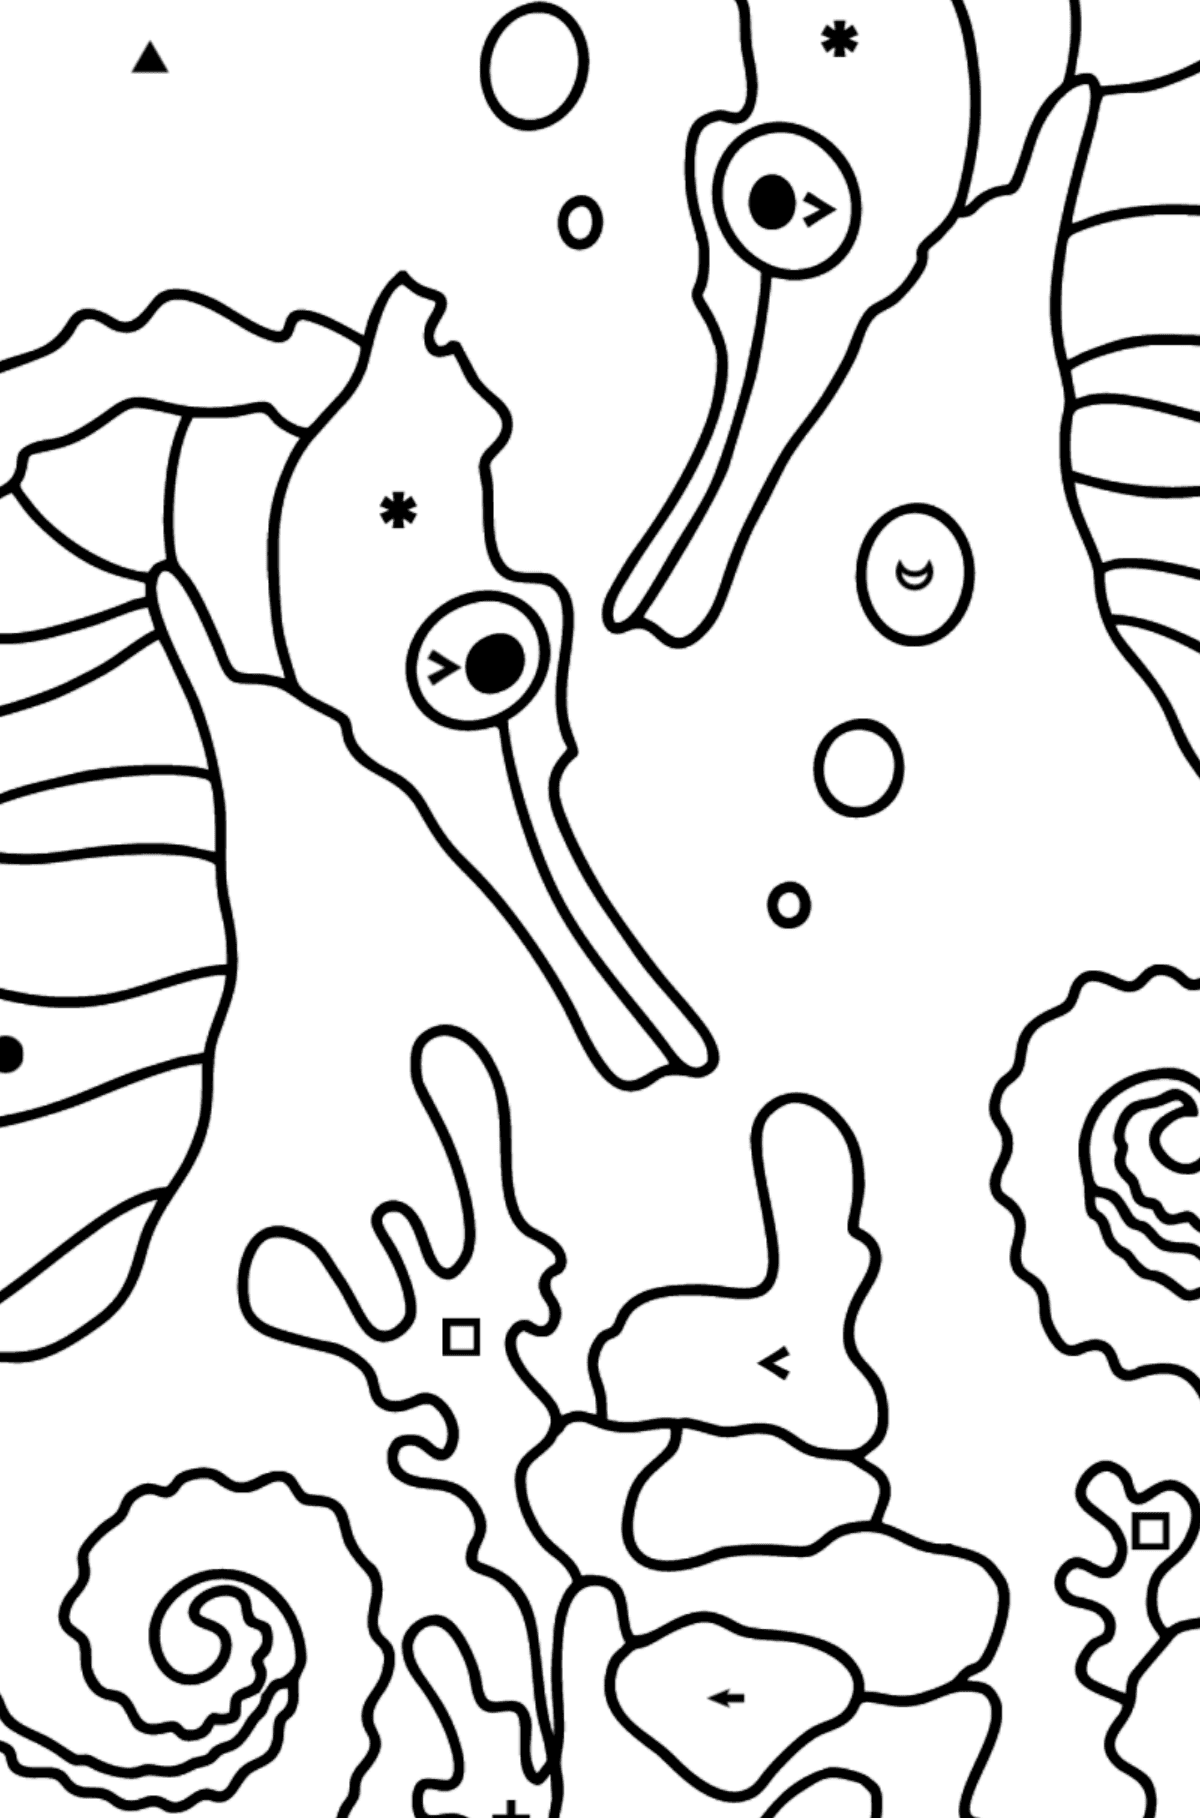 Dibujo para colorear Caballitos de mar - Colorear por Símbolos para Niños